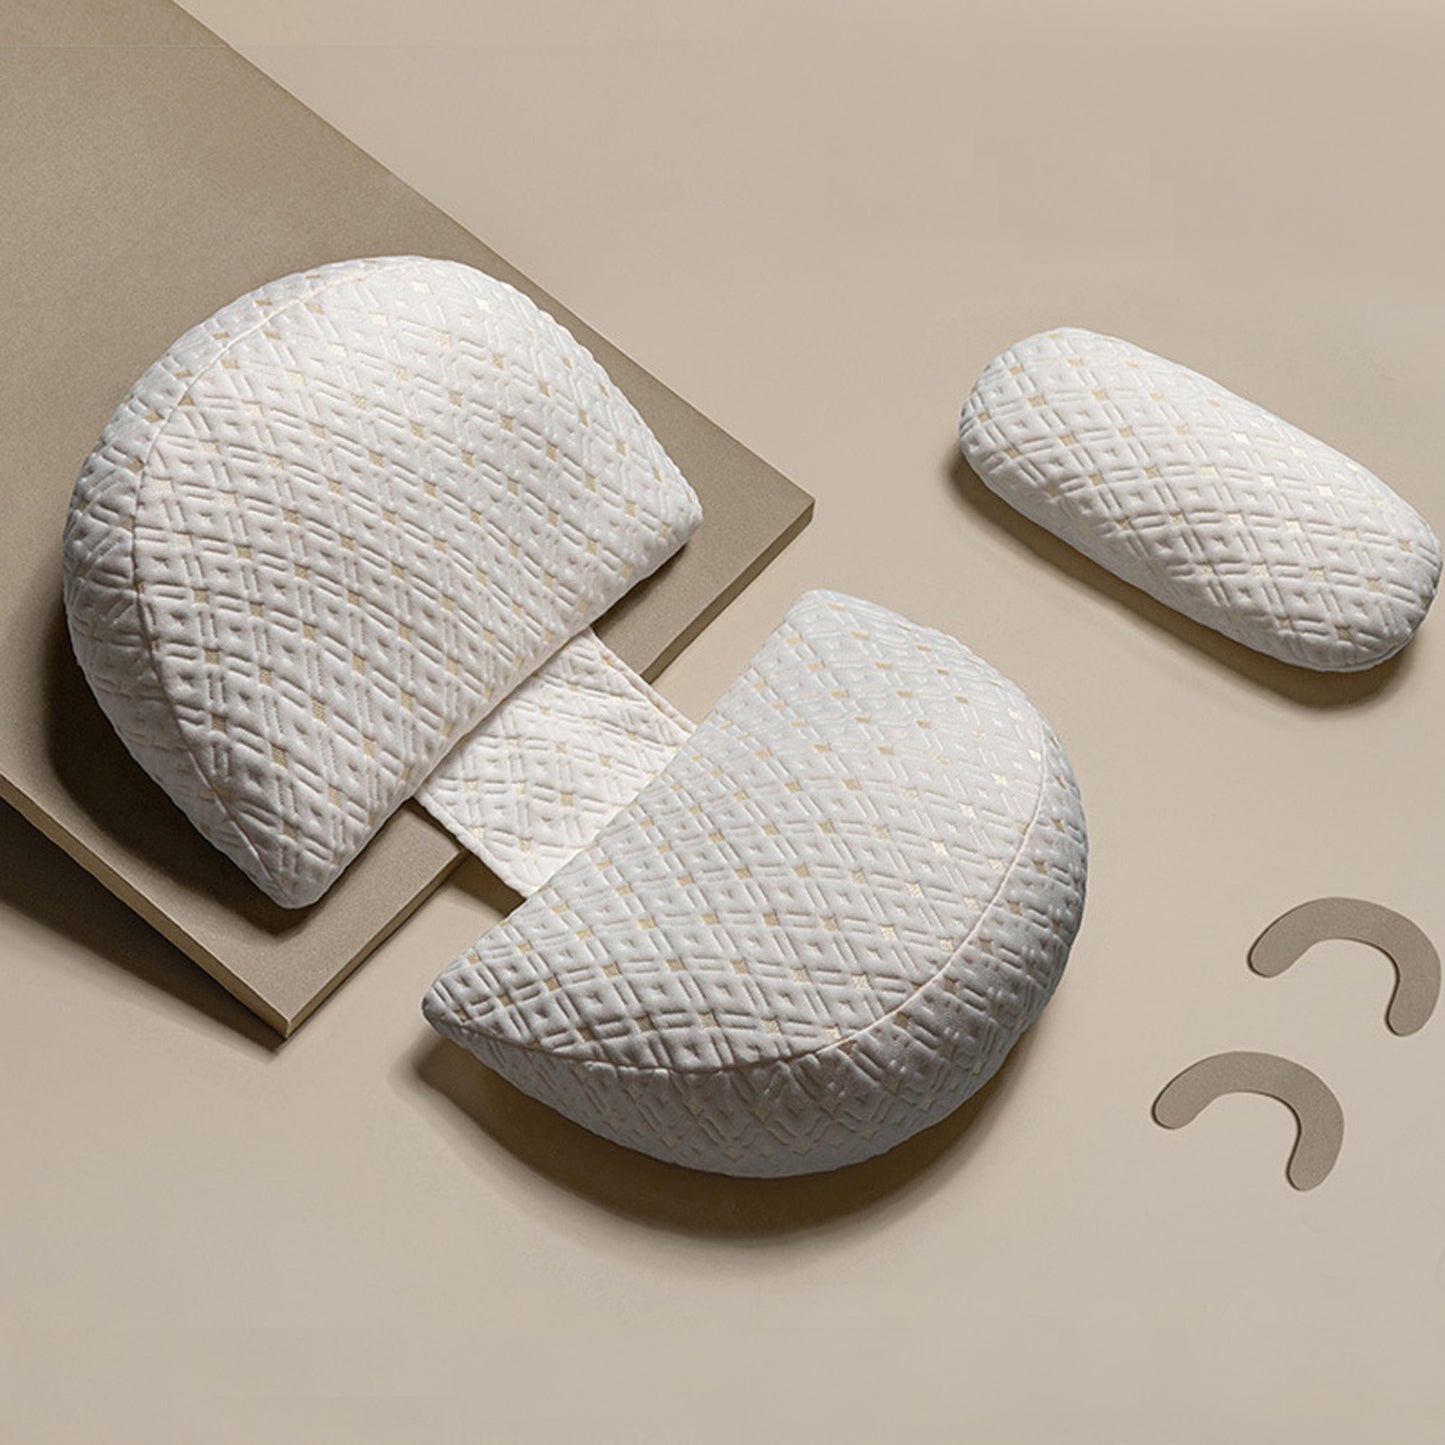 Pregnancy Pillow Bedding Full Body Pillow for Comfortable U-Shape